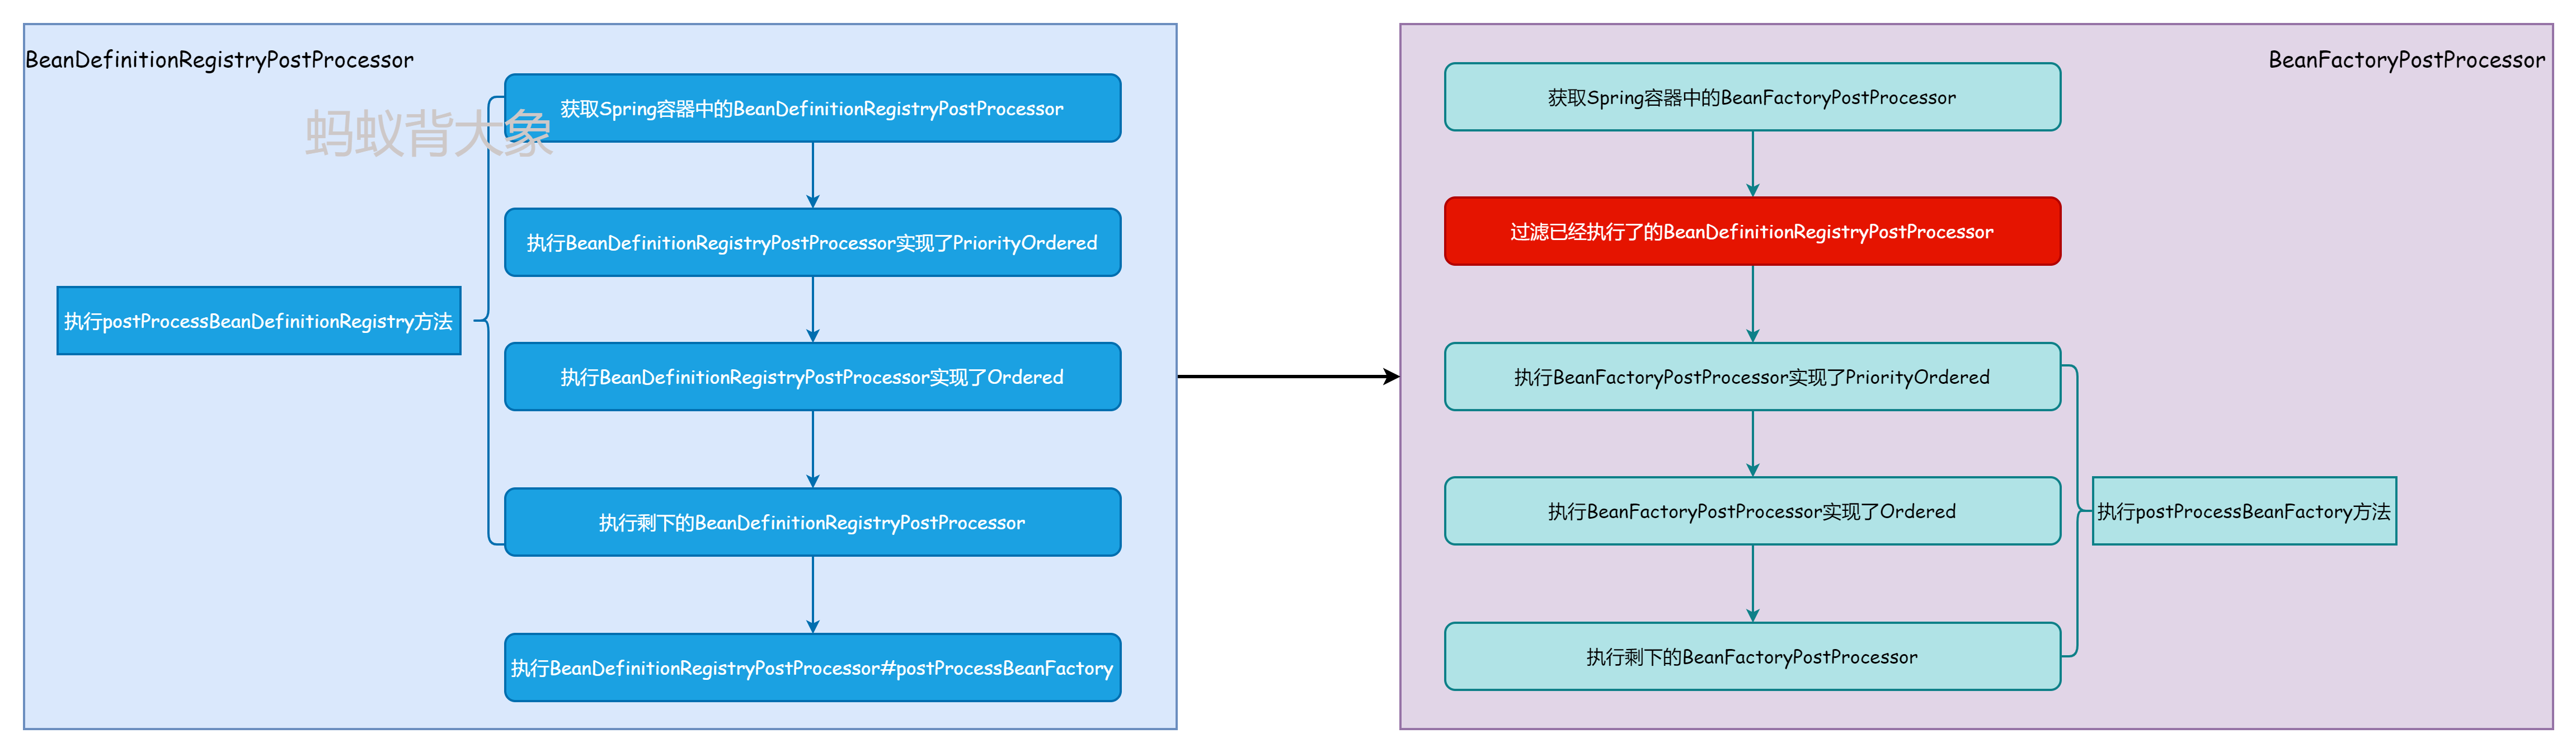 BeanFactoryPostProcessor执行流程图